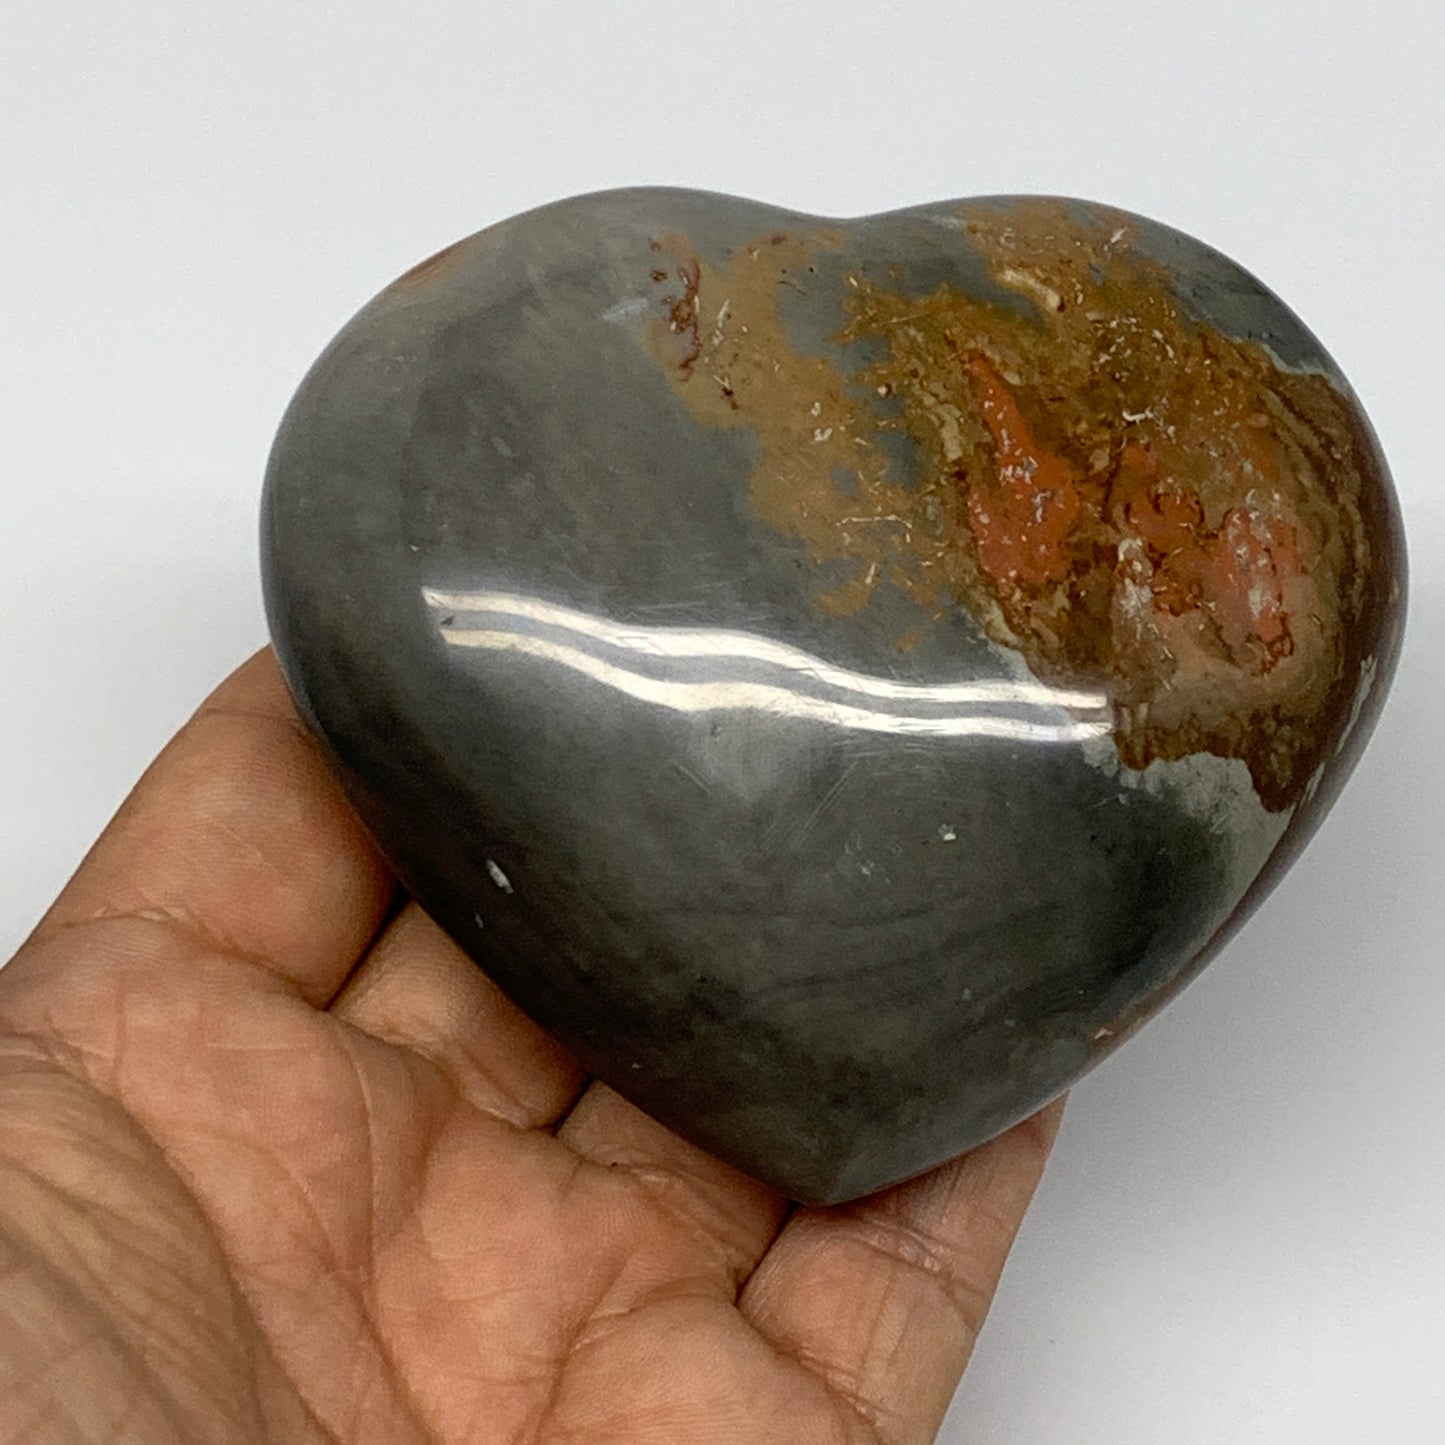 294.6g, 3"x3.4"x1.4" Polychrome Jasper Heart Polished Healing Crystal, B17721